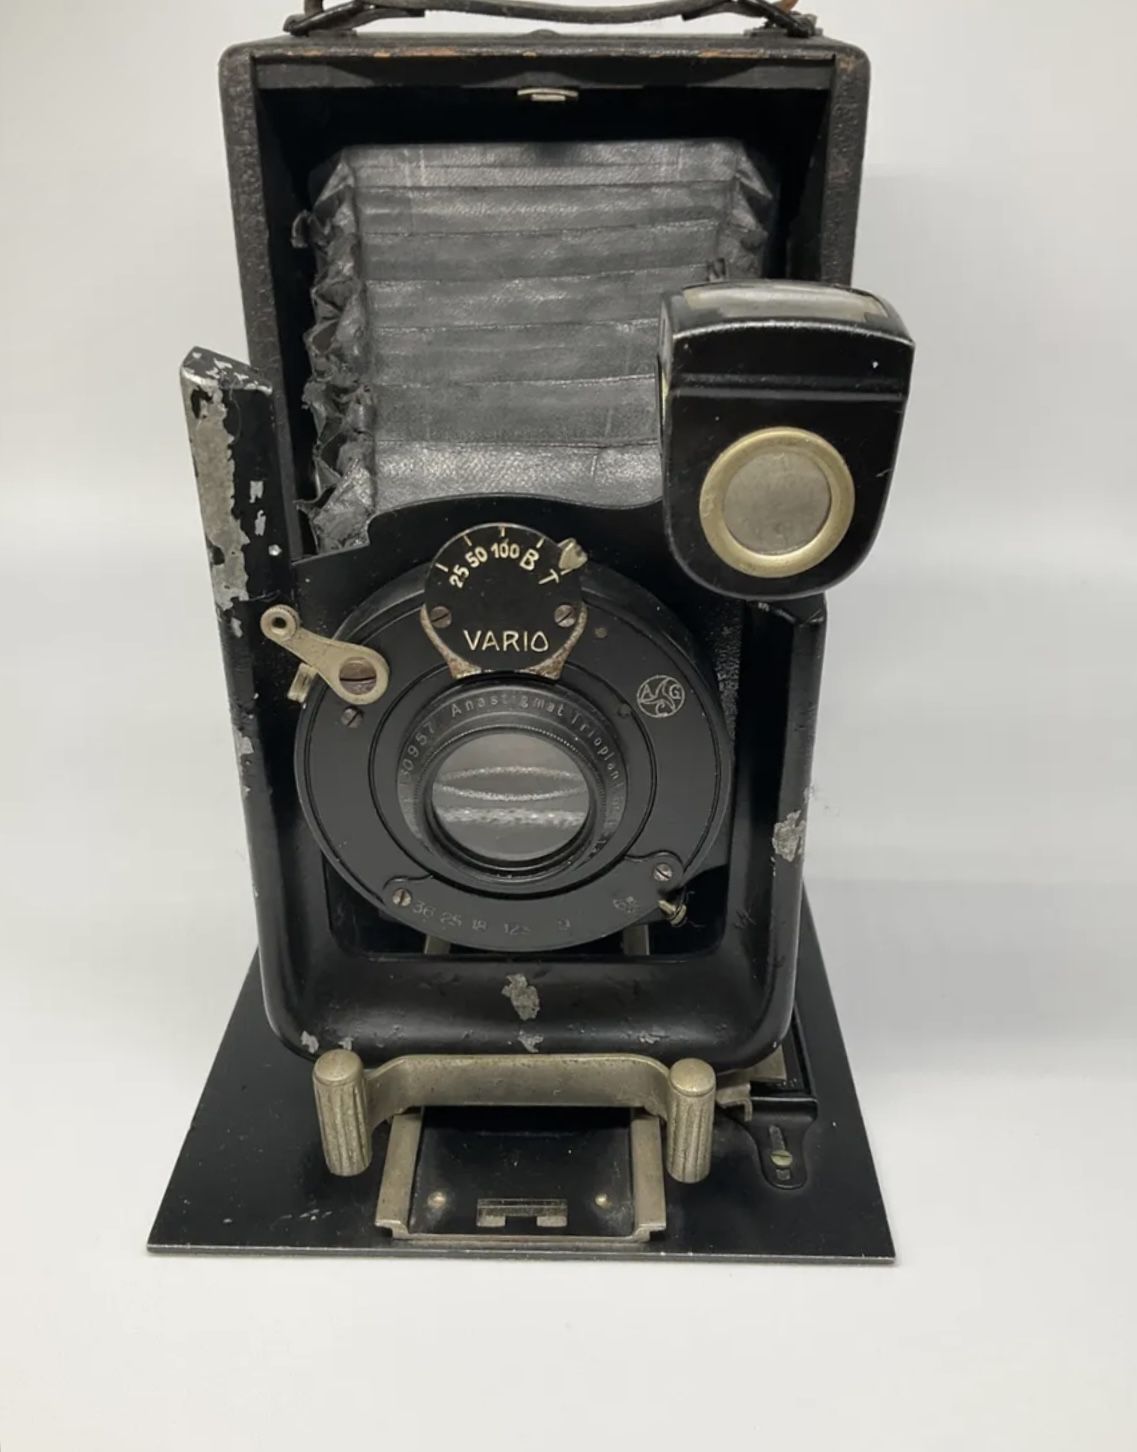 Antique Rare Folding Camera Vario Anastigmat Traioplan 1:6.8 F=135 mm Mayer Goer